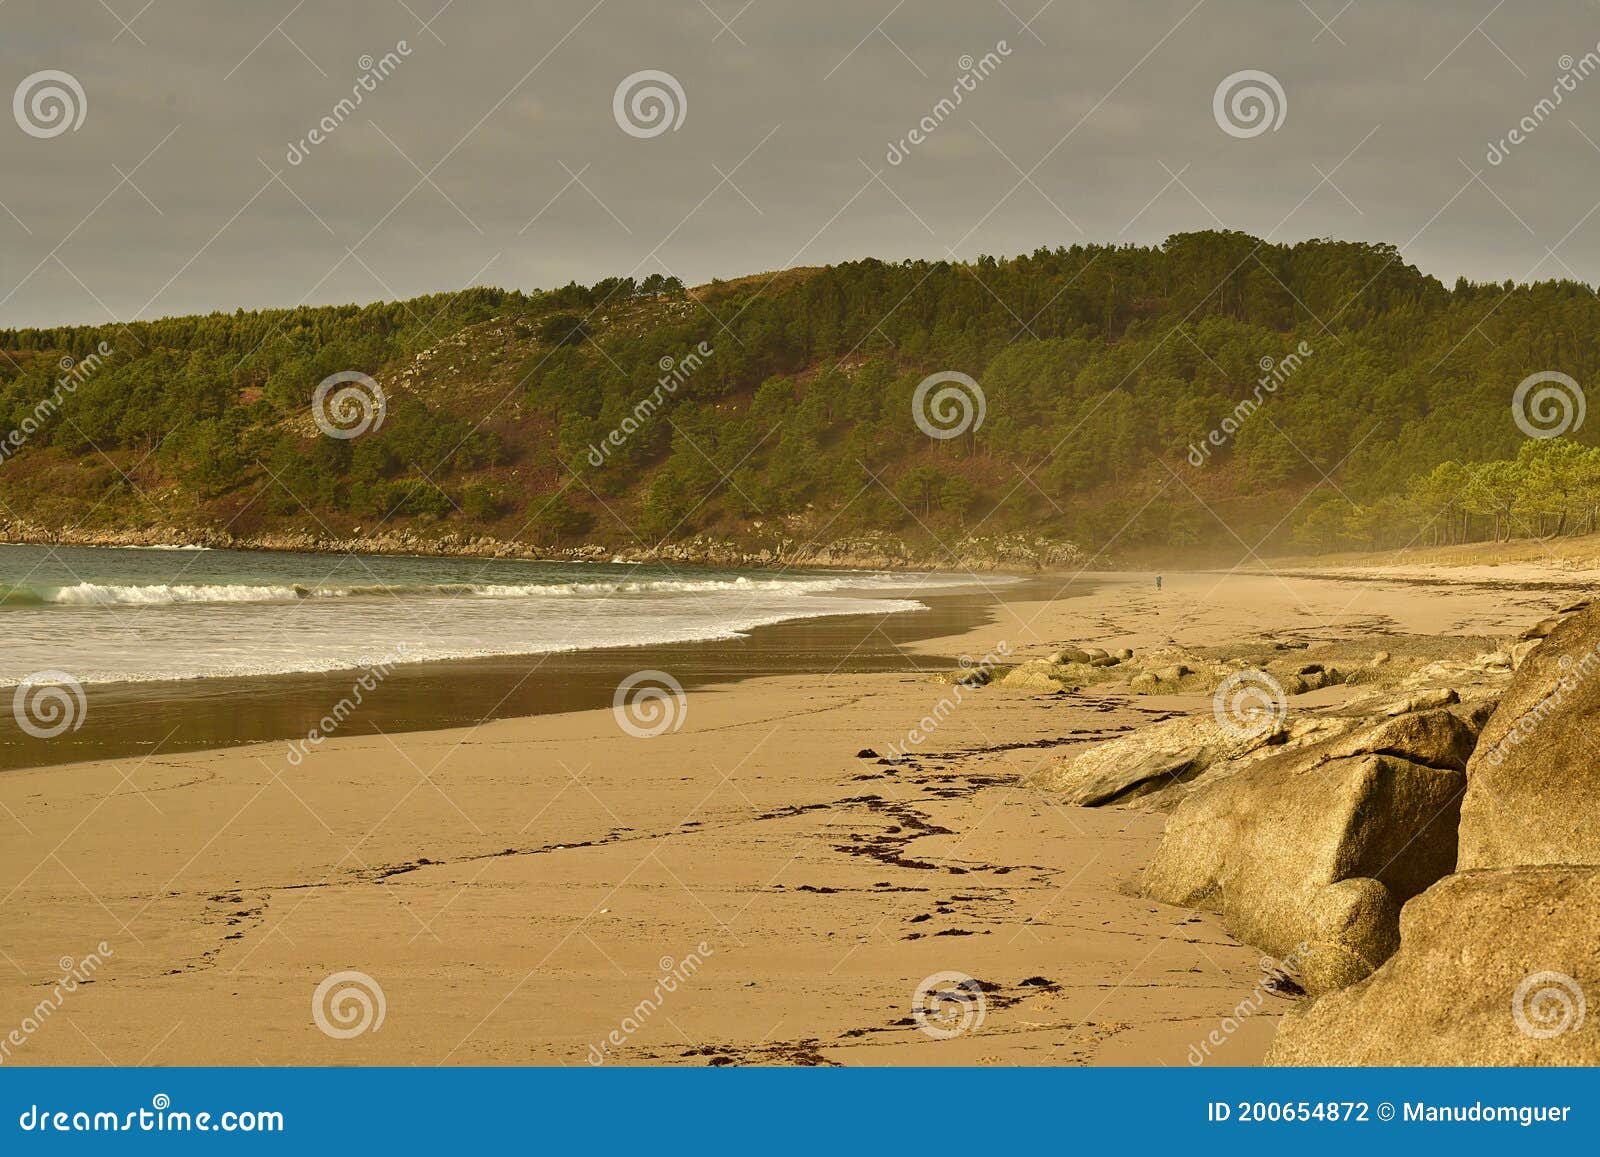 barras beach cangas, pontevedra footprints on the beach.